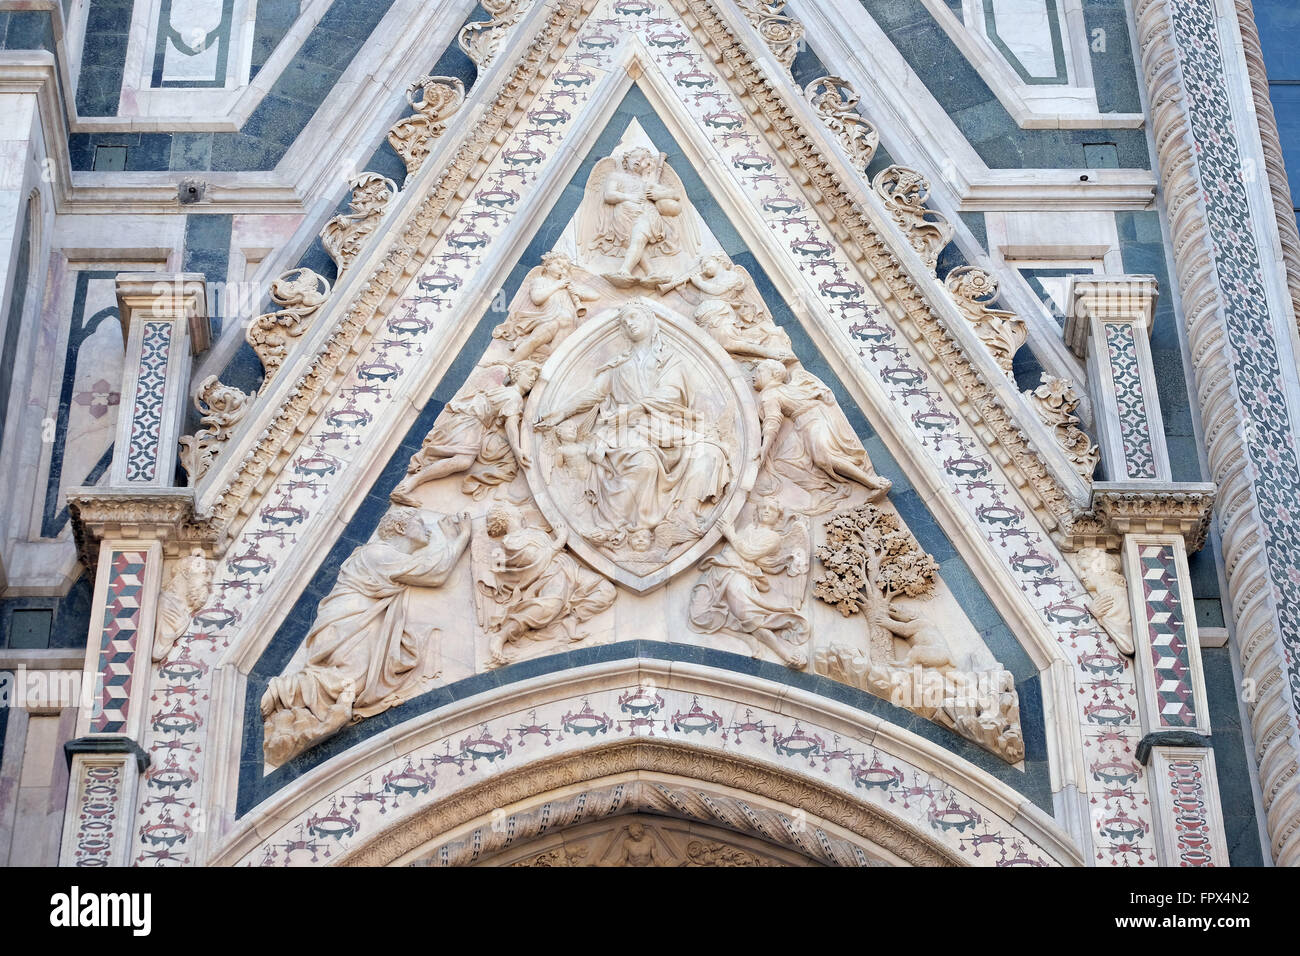 Madonna de la ceinture, portail de Cattedrale di Santa Maria del Fiore  (Cathédrale de Sainte Marie de la fleur), Florence, Italie Photo Stock -  Alamy